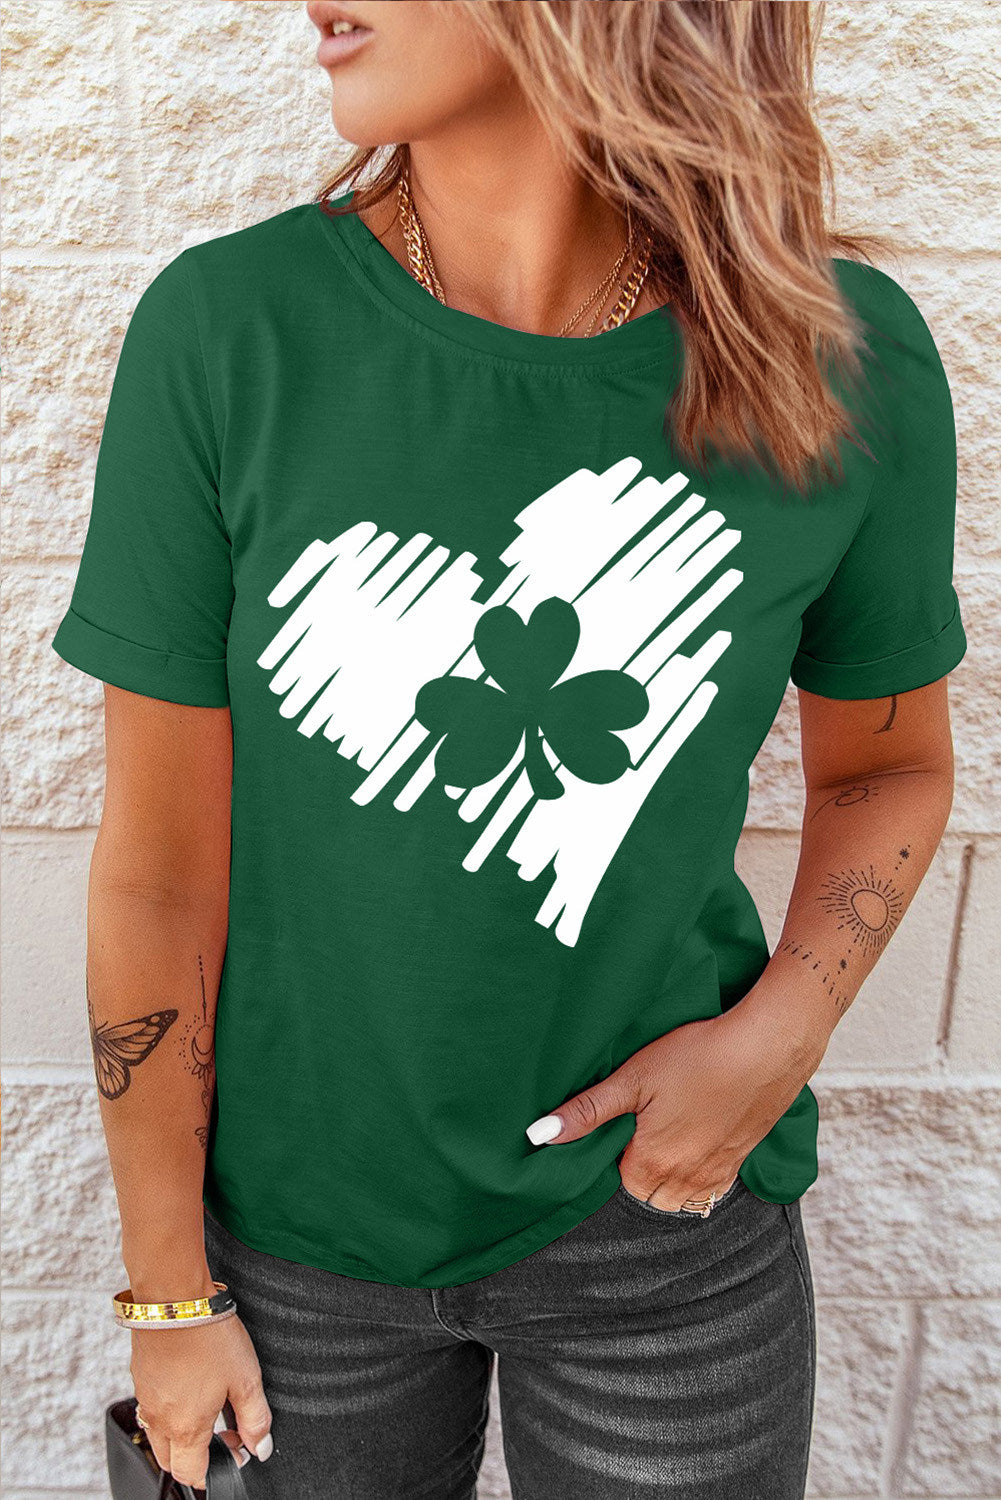 LC25219651-9-S, LC25219651-9-M, LC25219651-9-L, LC25219651-9-XL, LC25219651-9-2XL, Green St. Patrick's Day Shirts for Women Lucky Sharmrock Love Heart Print Irish Tops